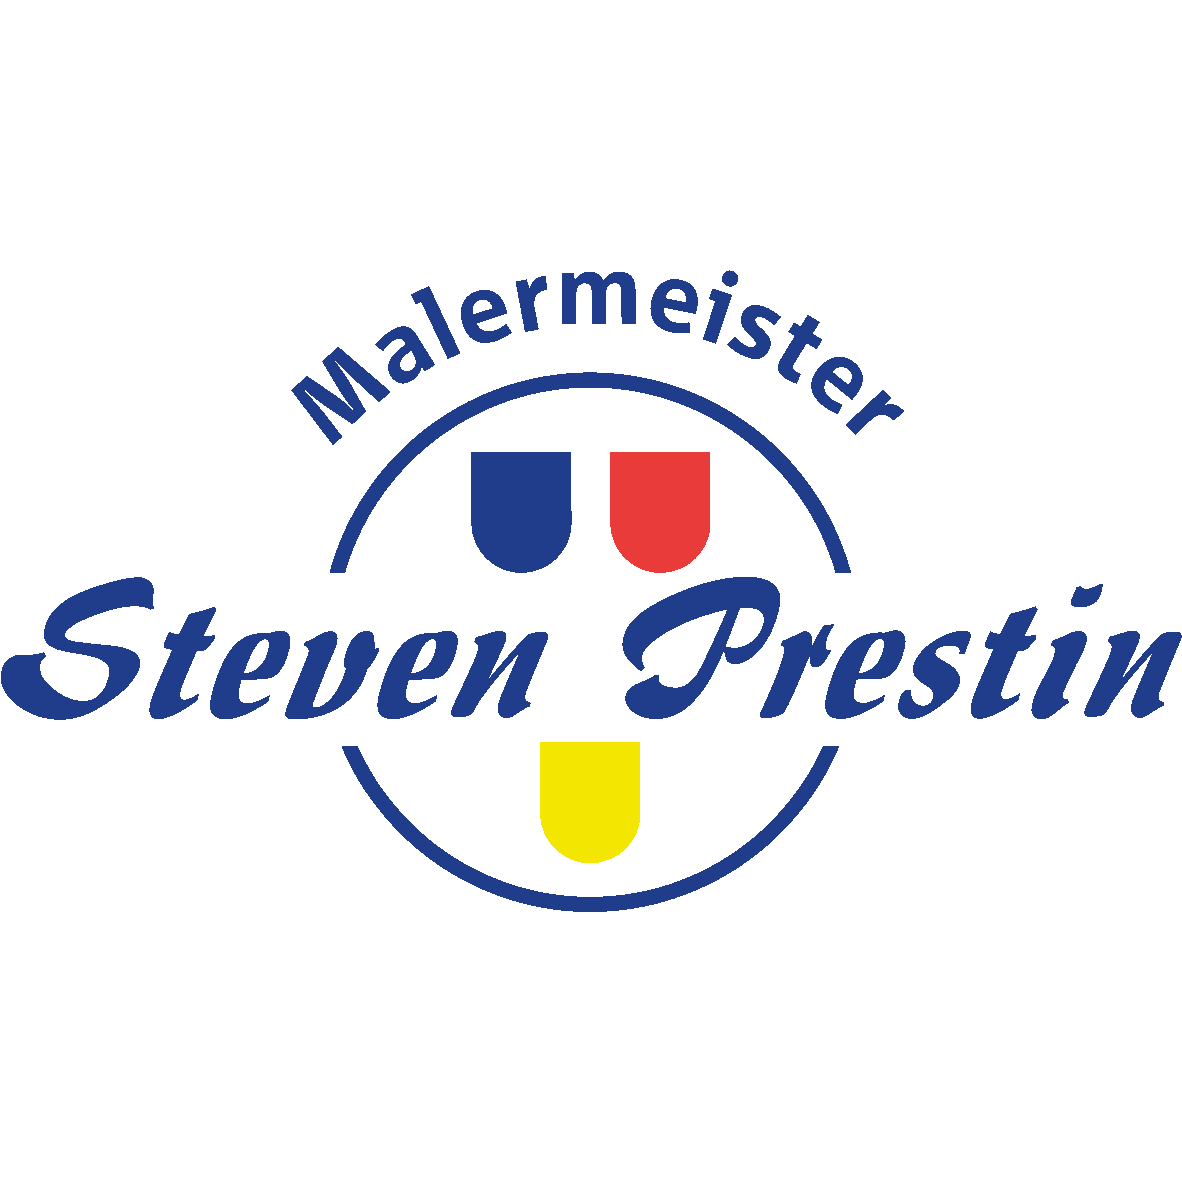 Steven Prestin Malermeister in Schwerin in Mecklenburg - Logo